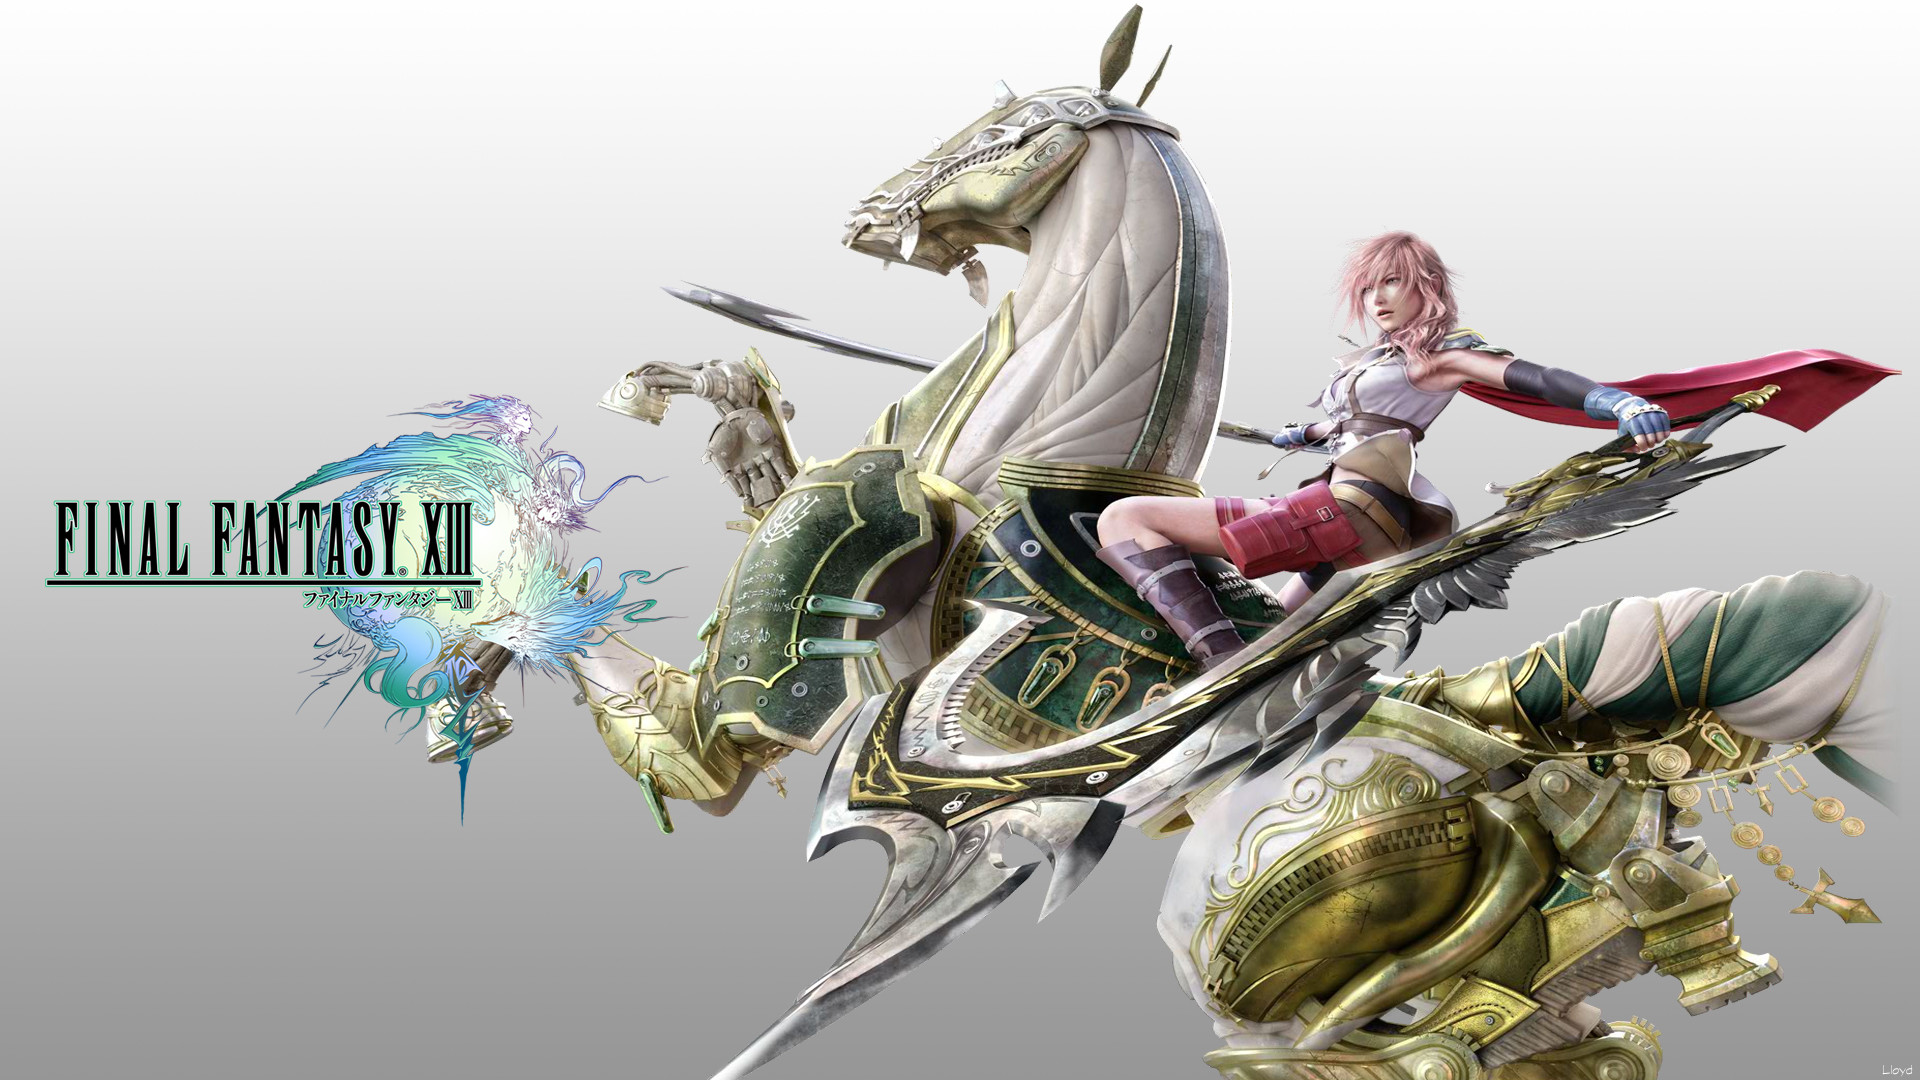 1920x1080 Final Fantasy XIII wp4 by igotgame1075 Final Fantasy XIII wp4 by  igotgame1075